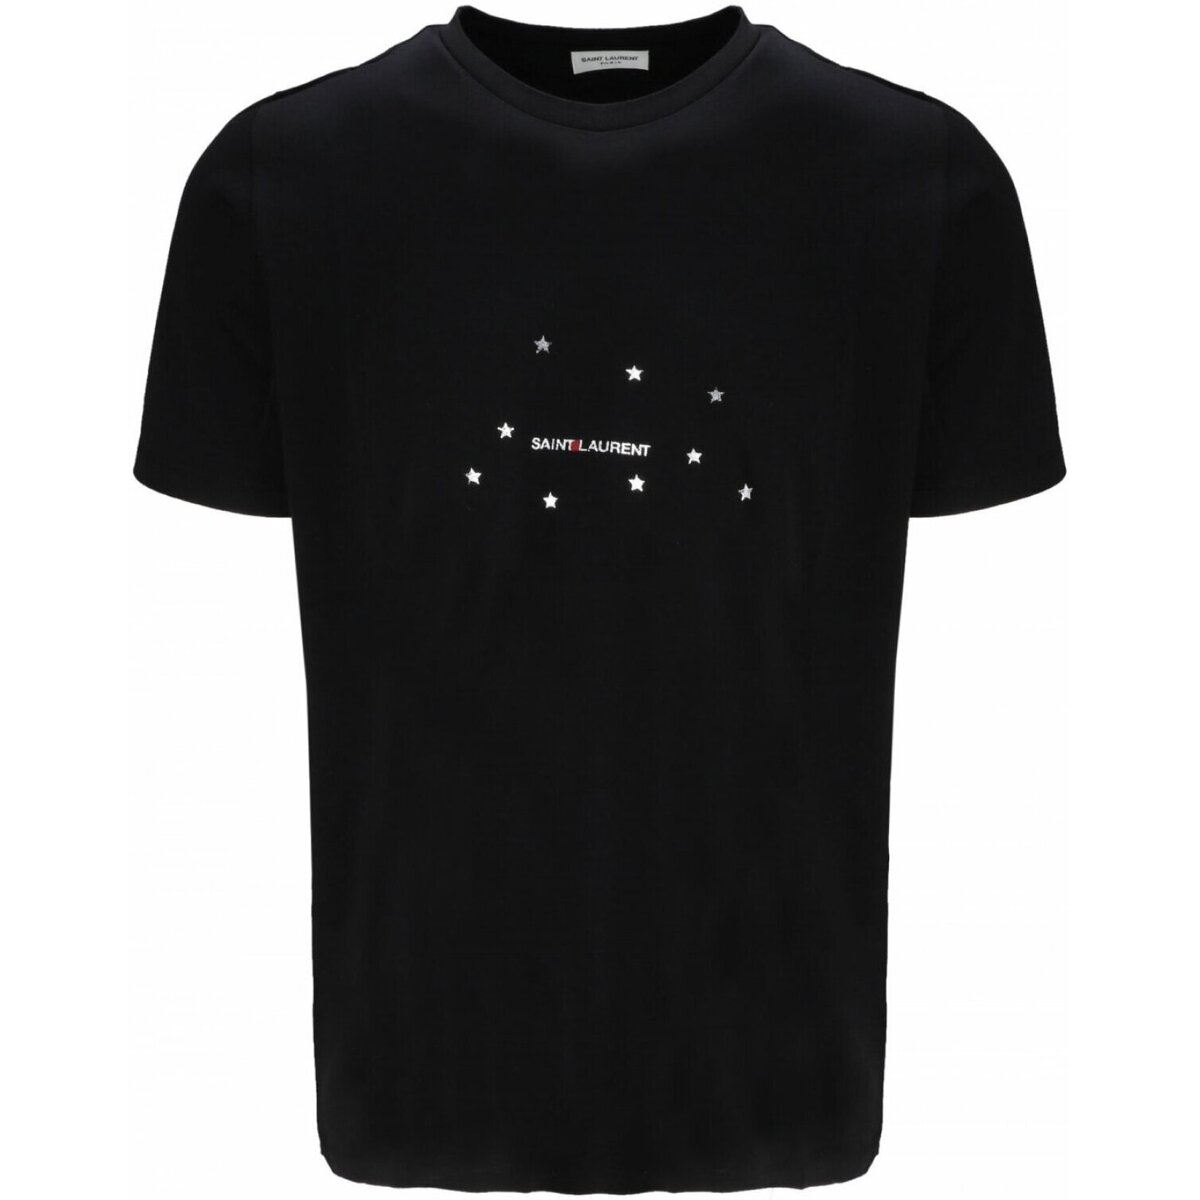 Textiel Heren T-shirts korte mouwen Yves Saint Laurent BMK577087 Zwart